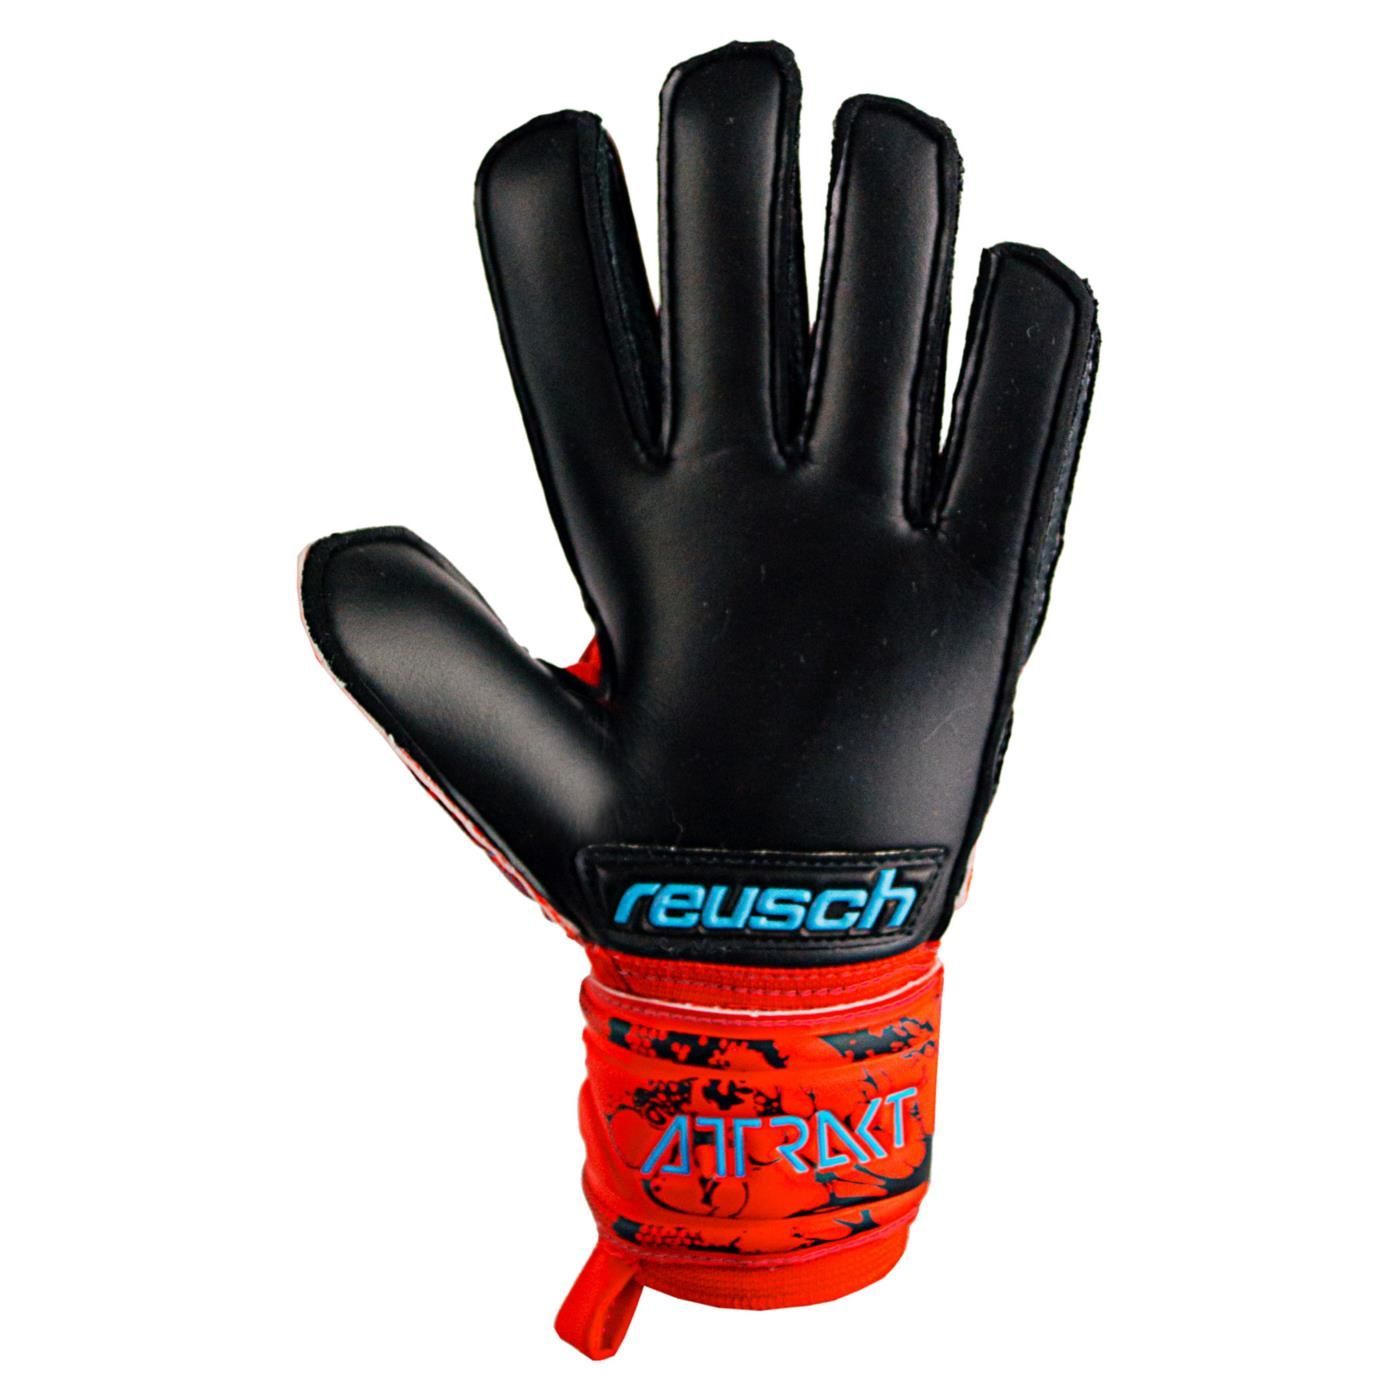 Воротарські рукавиці Reusch Attrakt Silver Junior 3333 купити